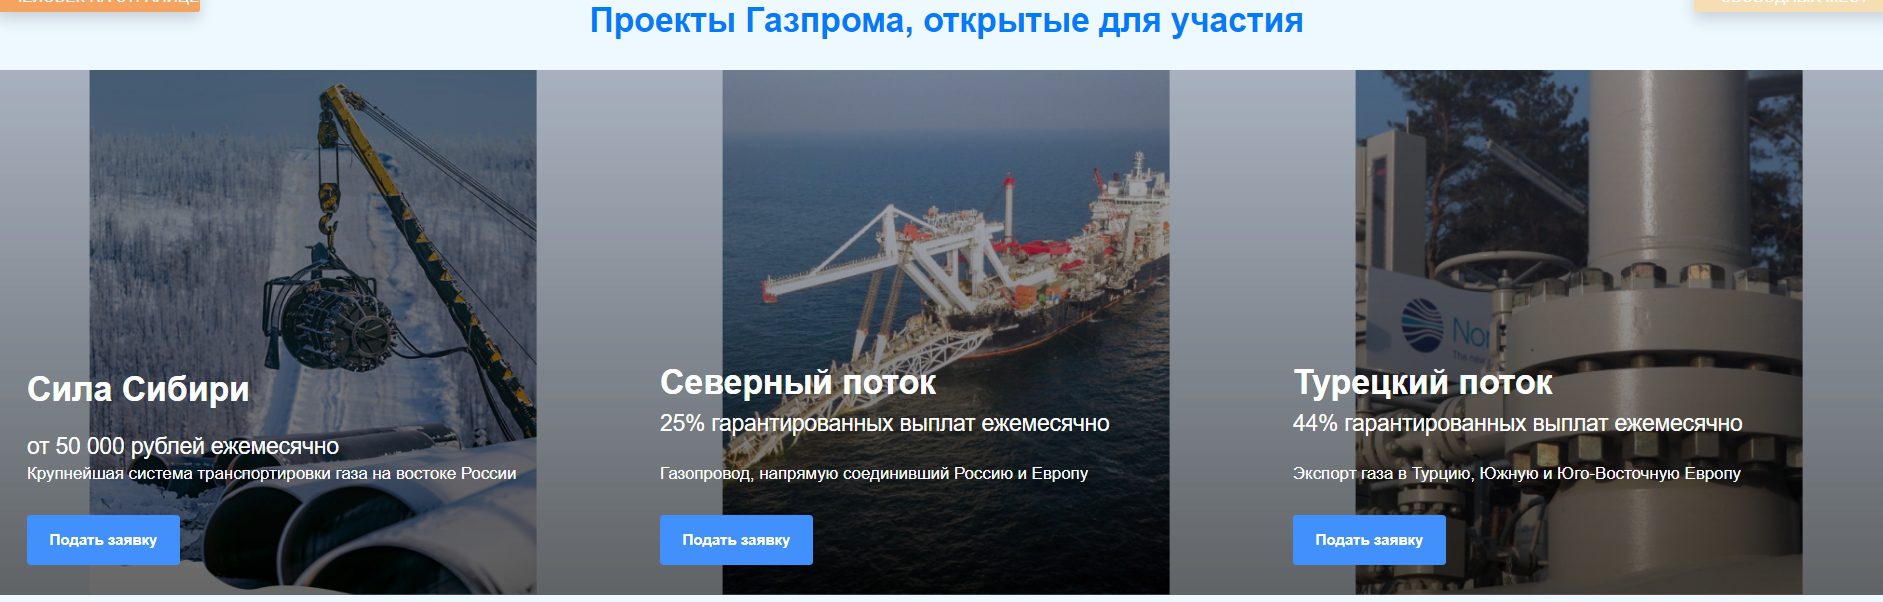 Проекты компании Газпром Инвестиции